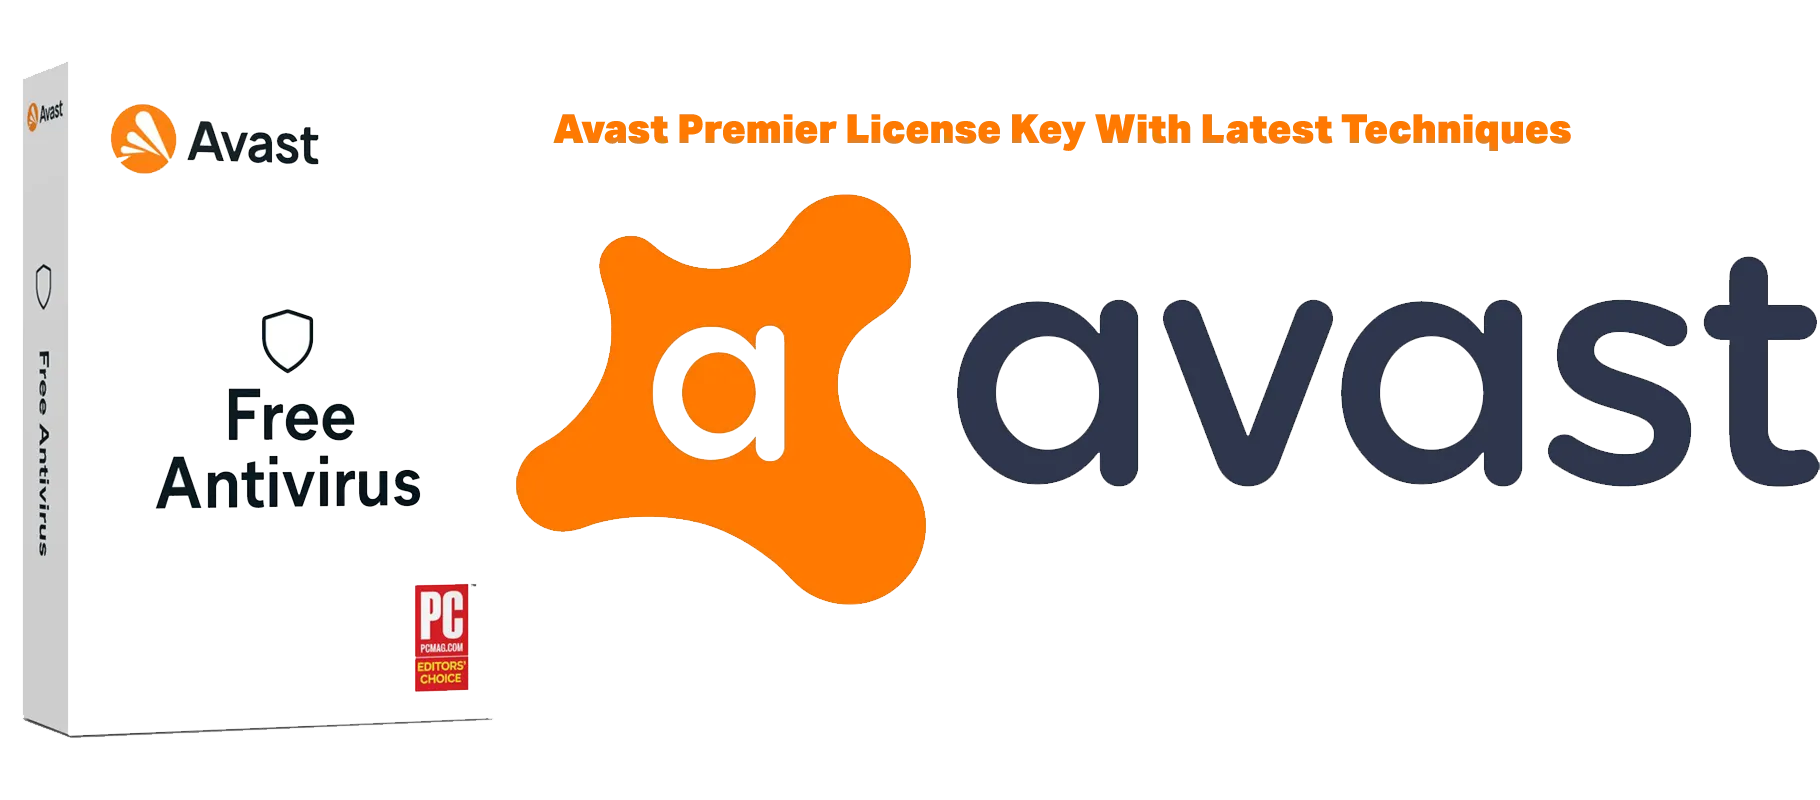 Avast premier license key